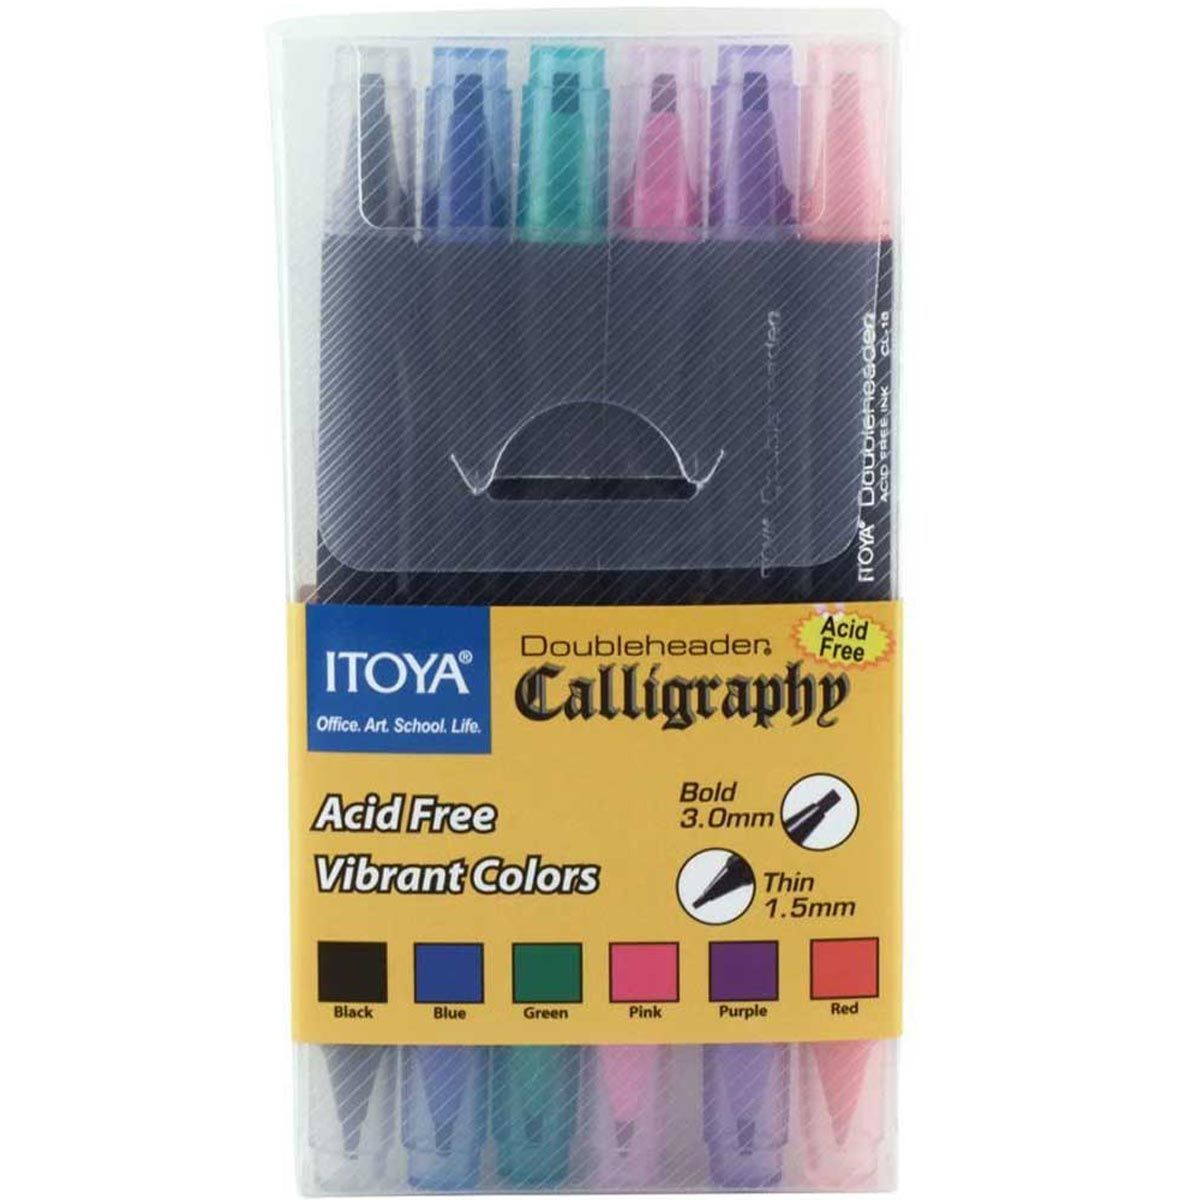 Itoya Doubleheader Calligraphy Vibrant Colours 6 Pen Set